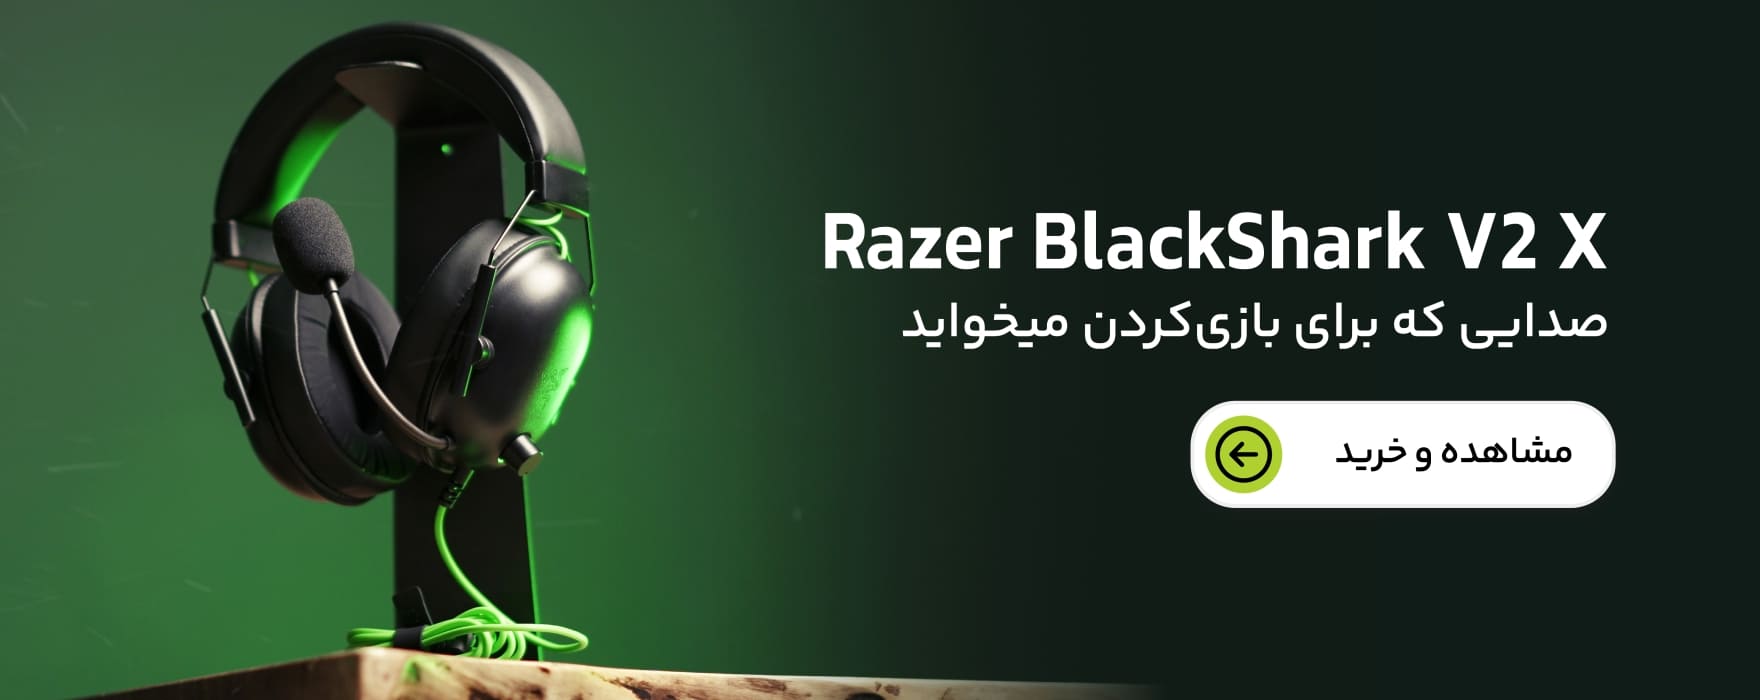 هدست Razer BlackShark V2 X